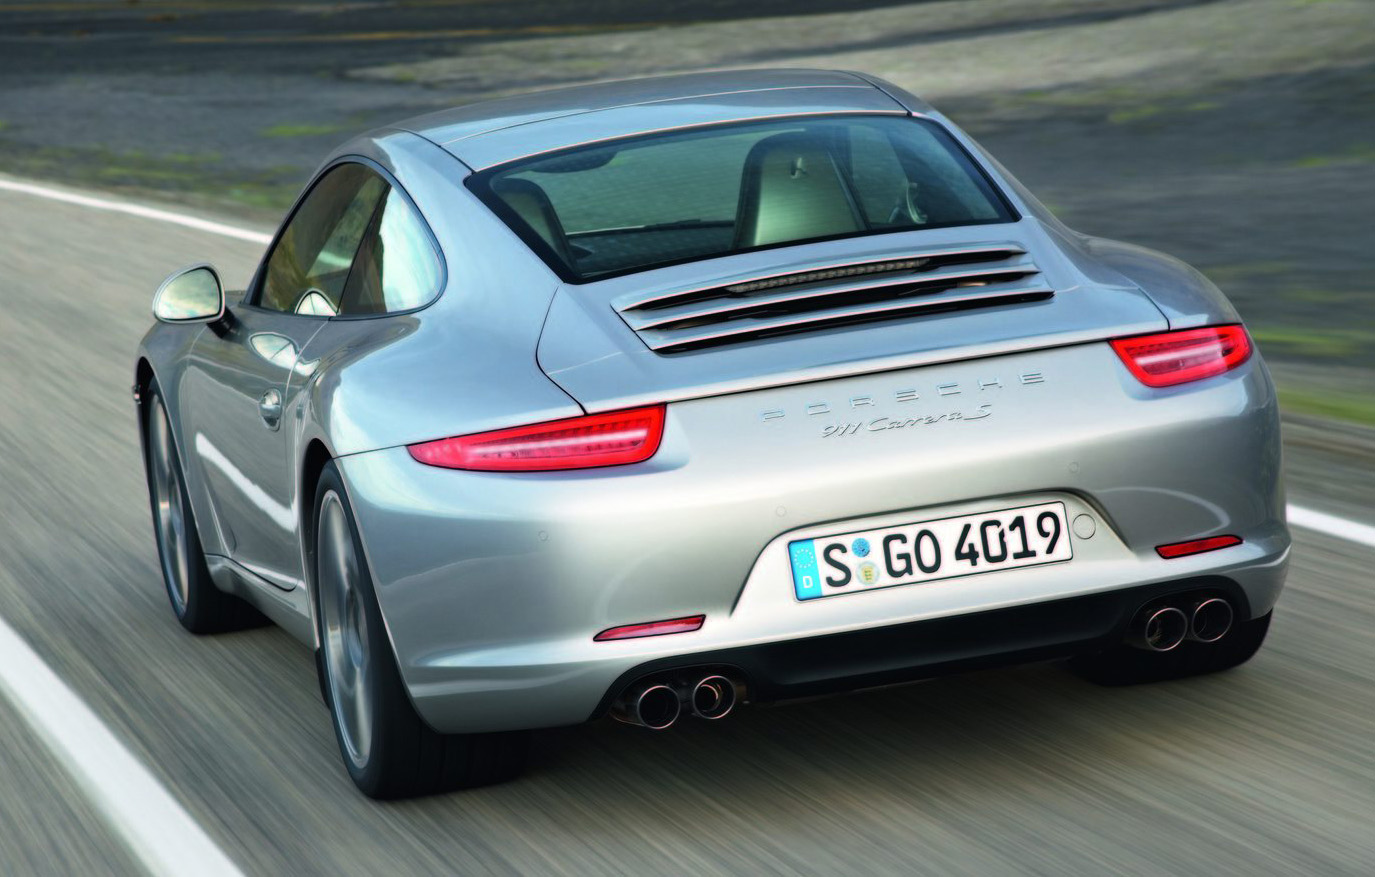 2012-Porsche-991-Rear-View-on-The-road.jpg